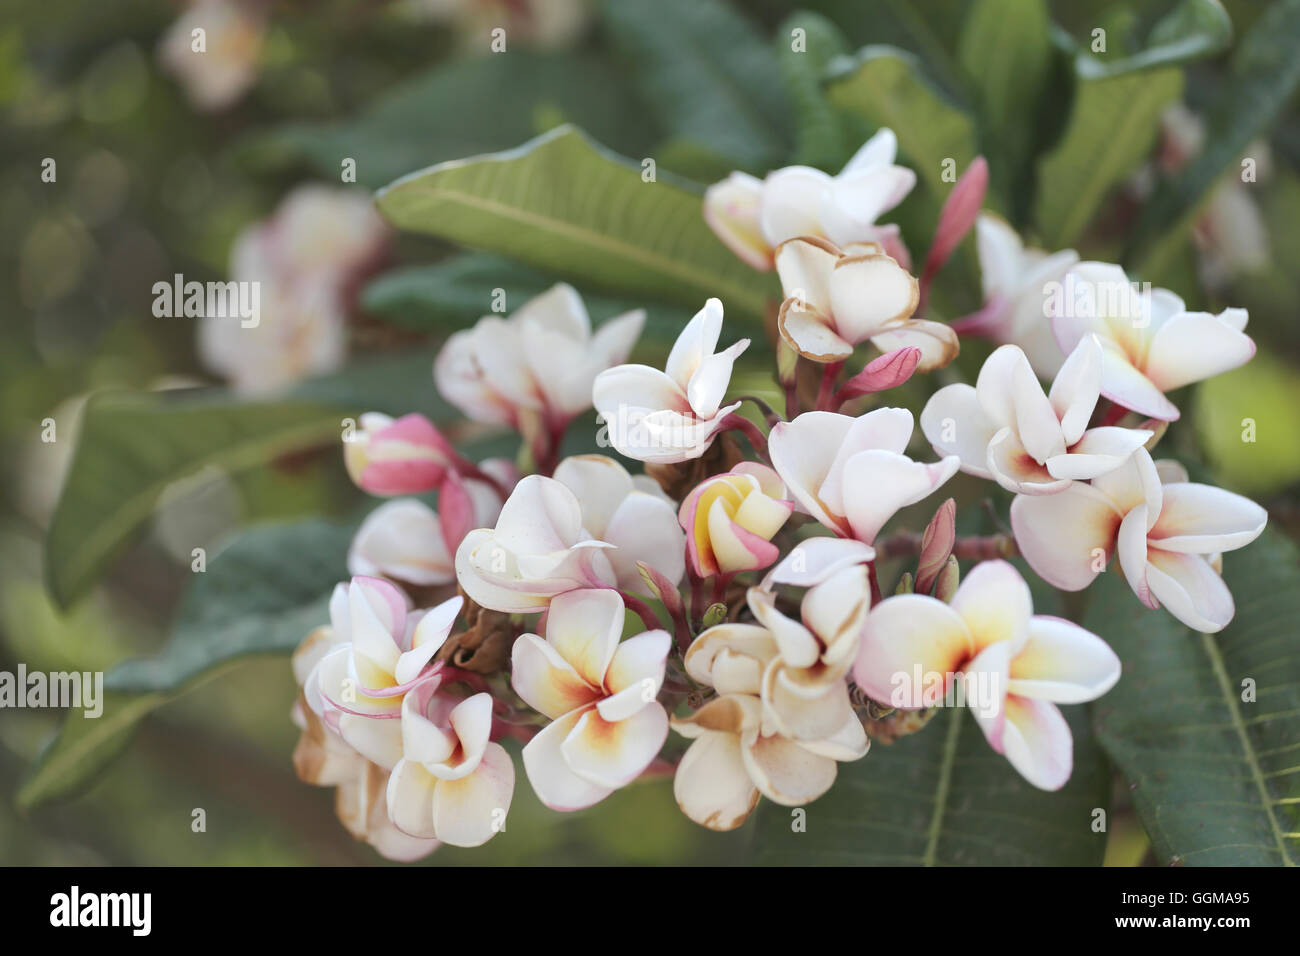 white plumeria or frangipani flower bloom on tree in the garden. Stock Photo